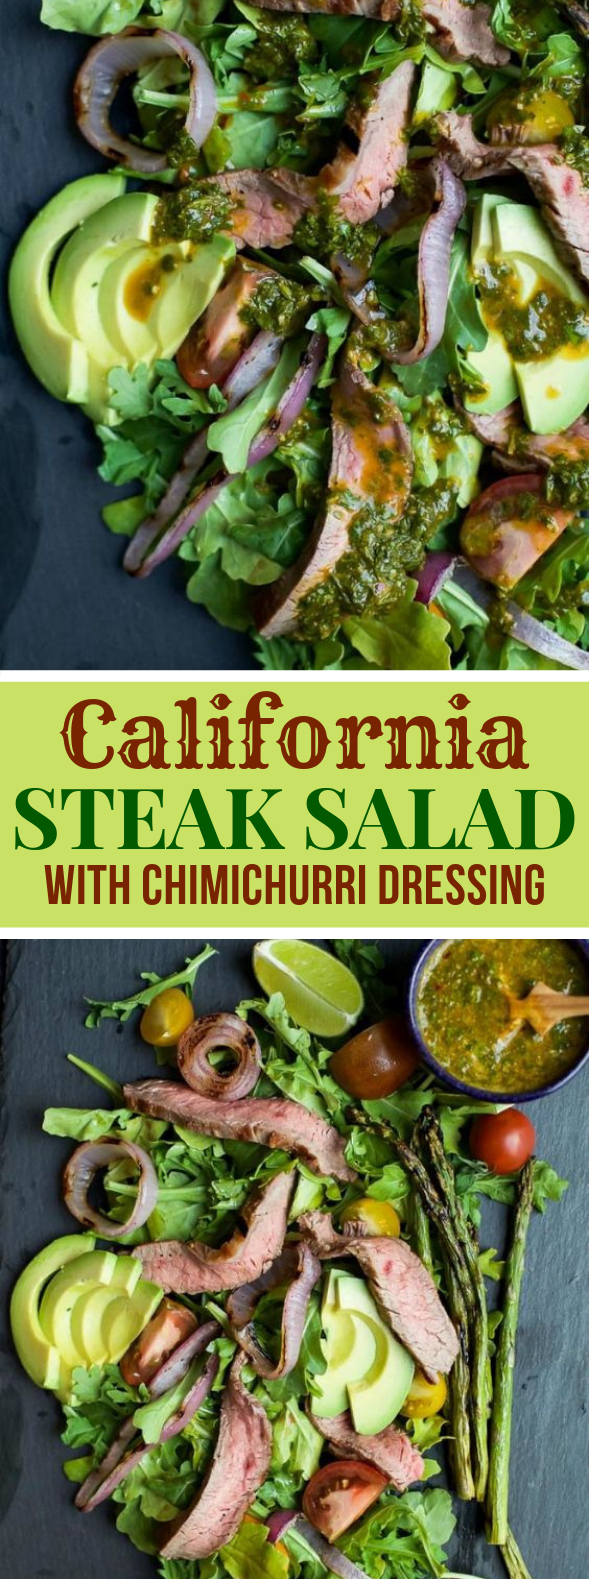 California Steak Salad with Chimichurri Dressing #vegetarian #fooddressing